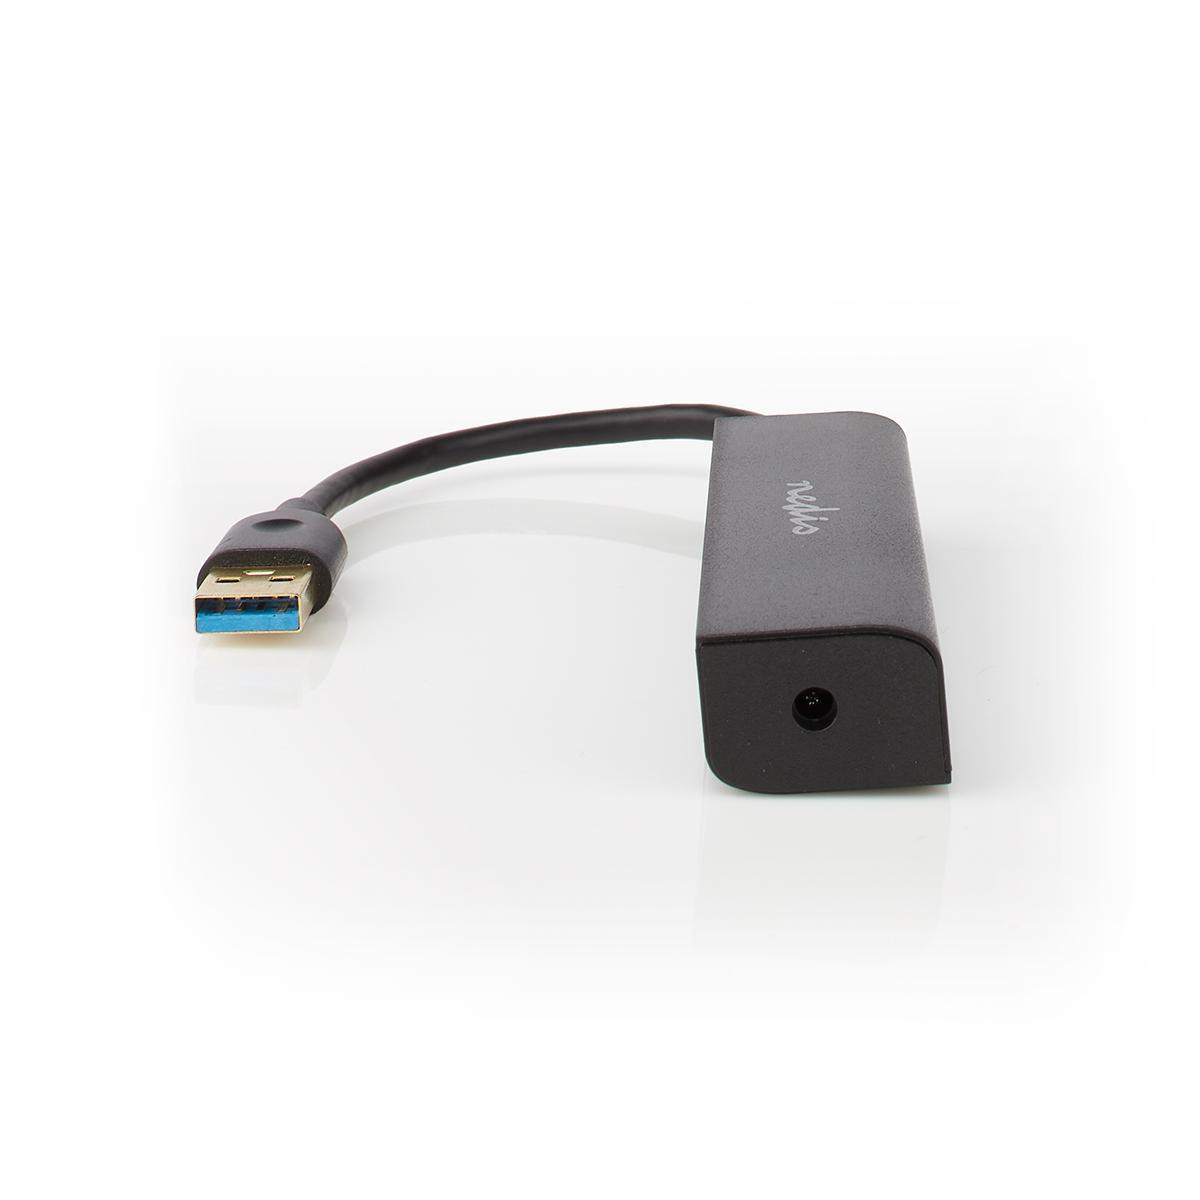 Nedis 4-Port USB 3.0 Hub